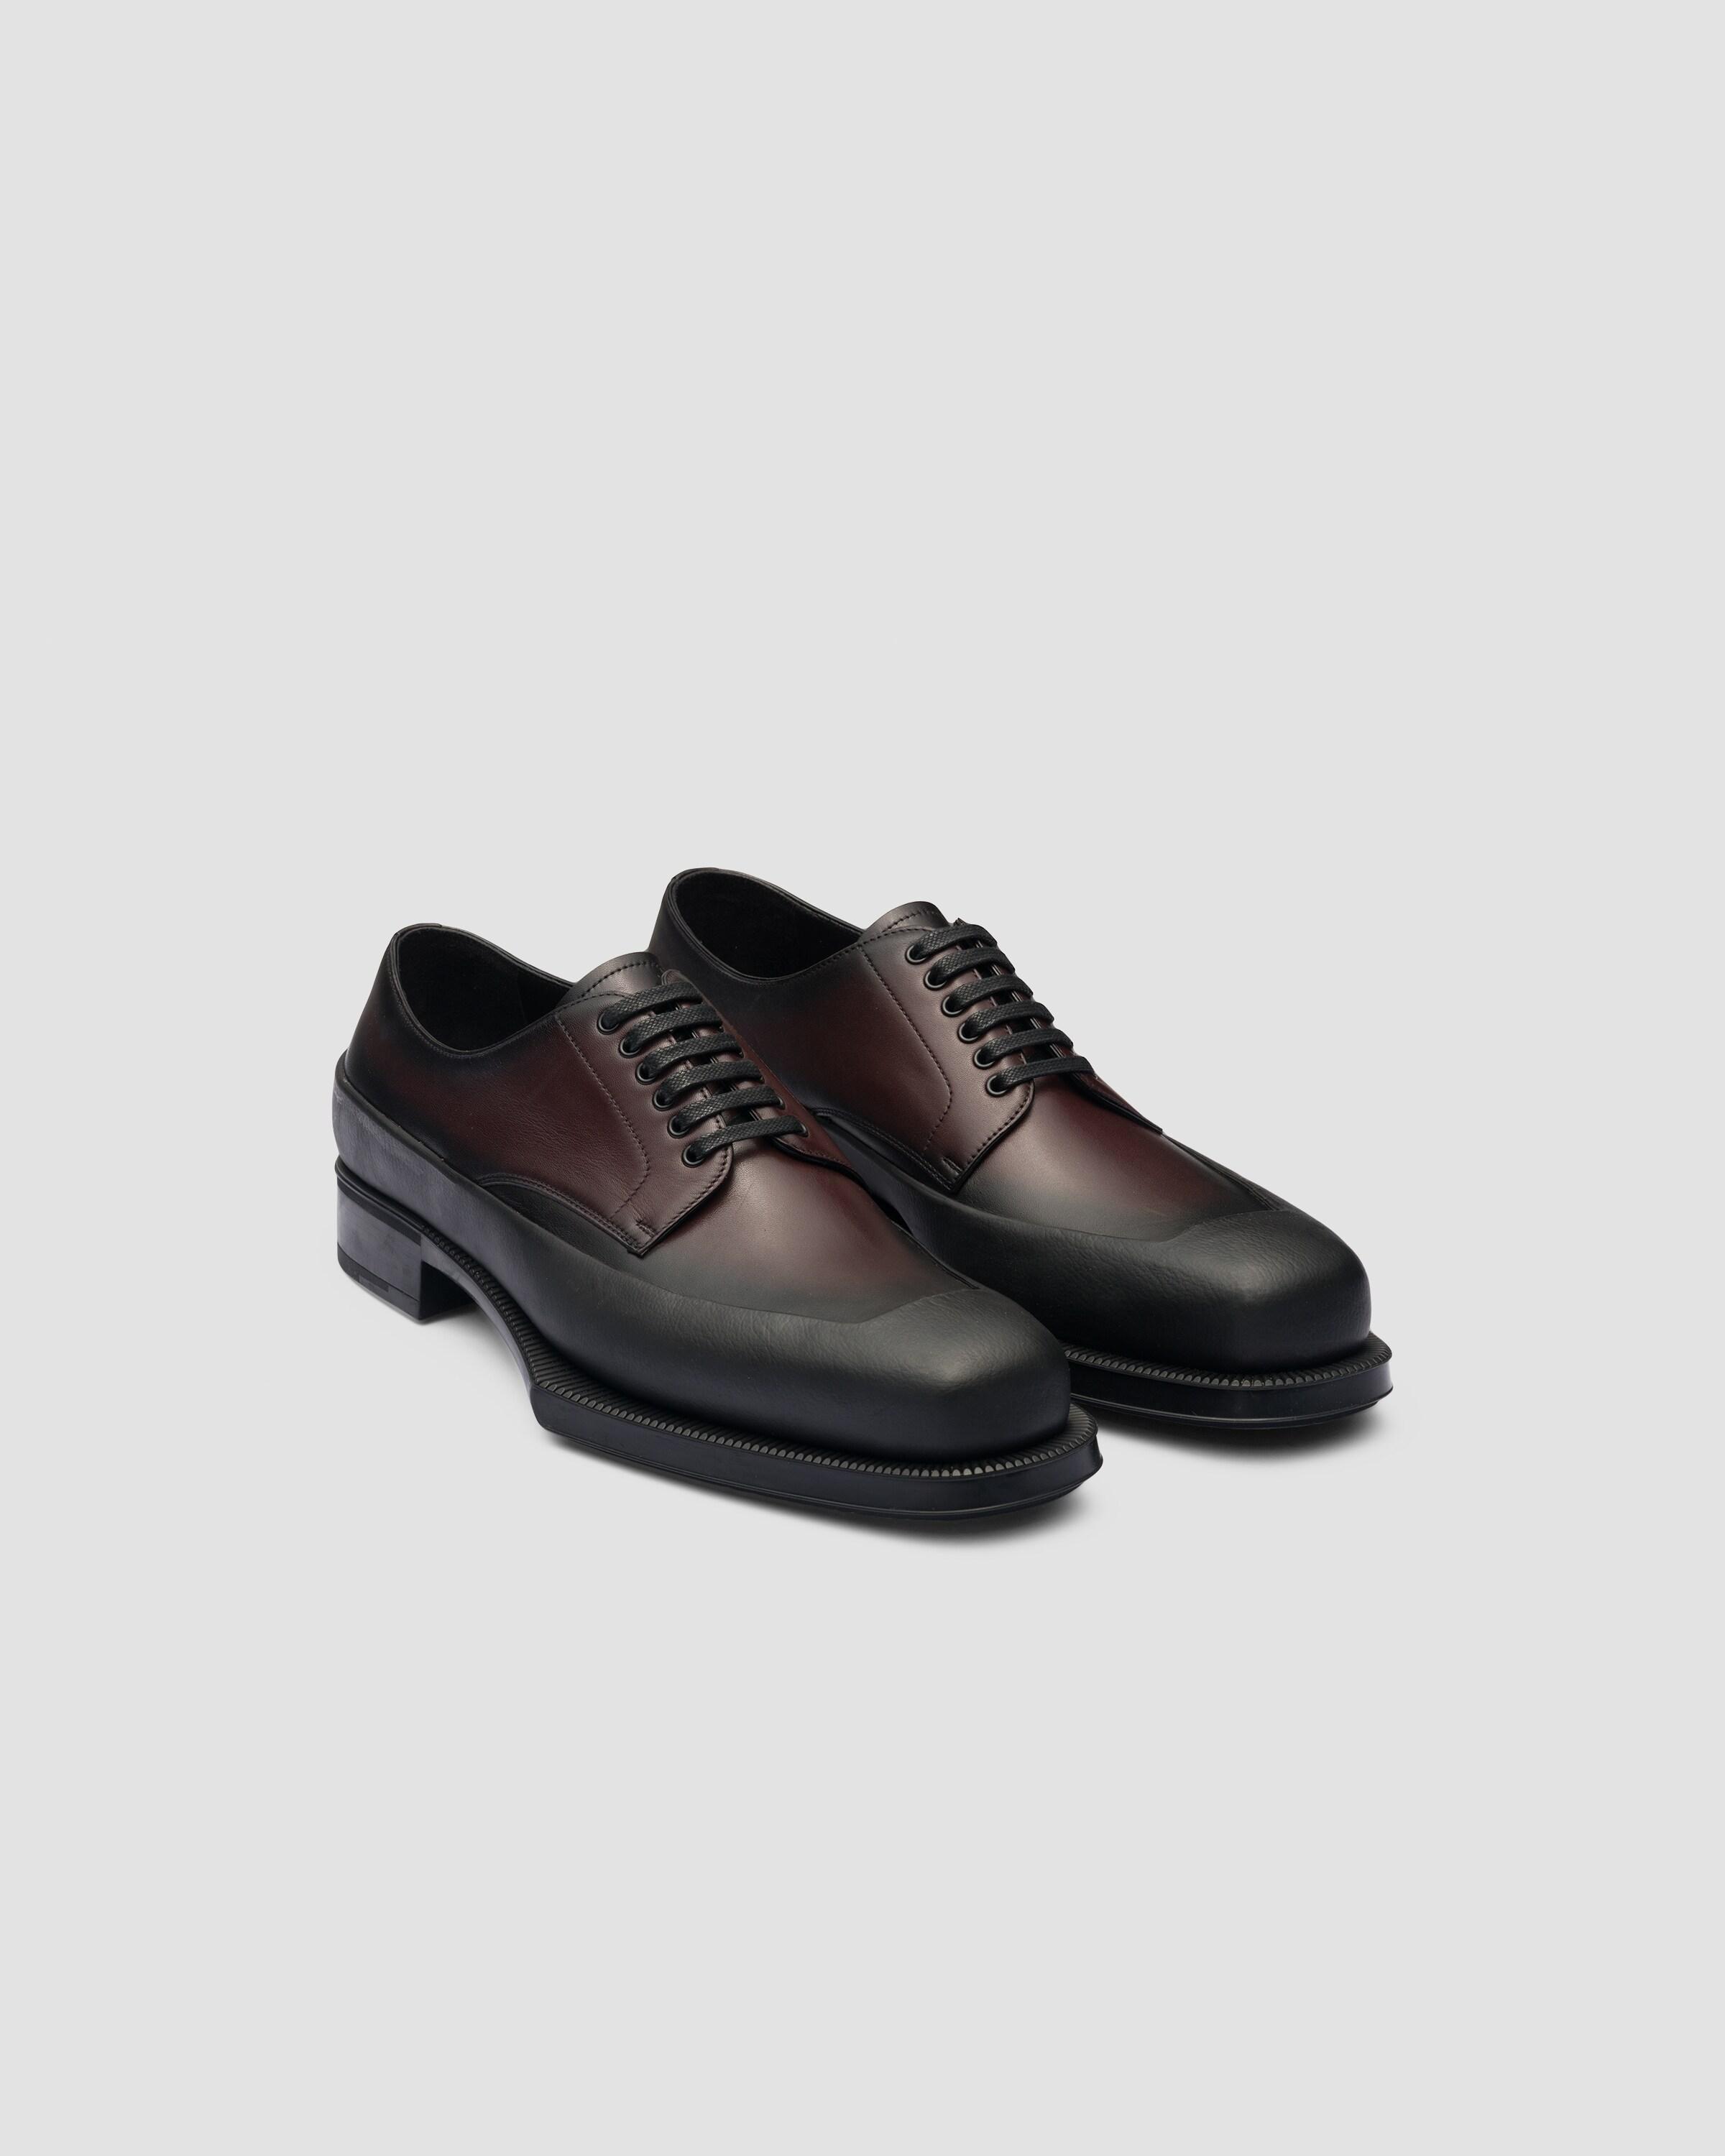 Prada Antique Leather Derby Shoes for Men | Lyst